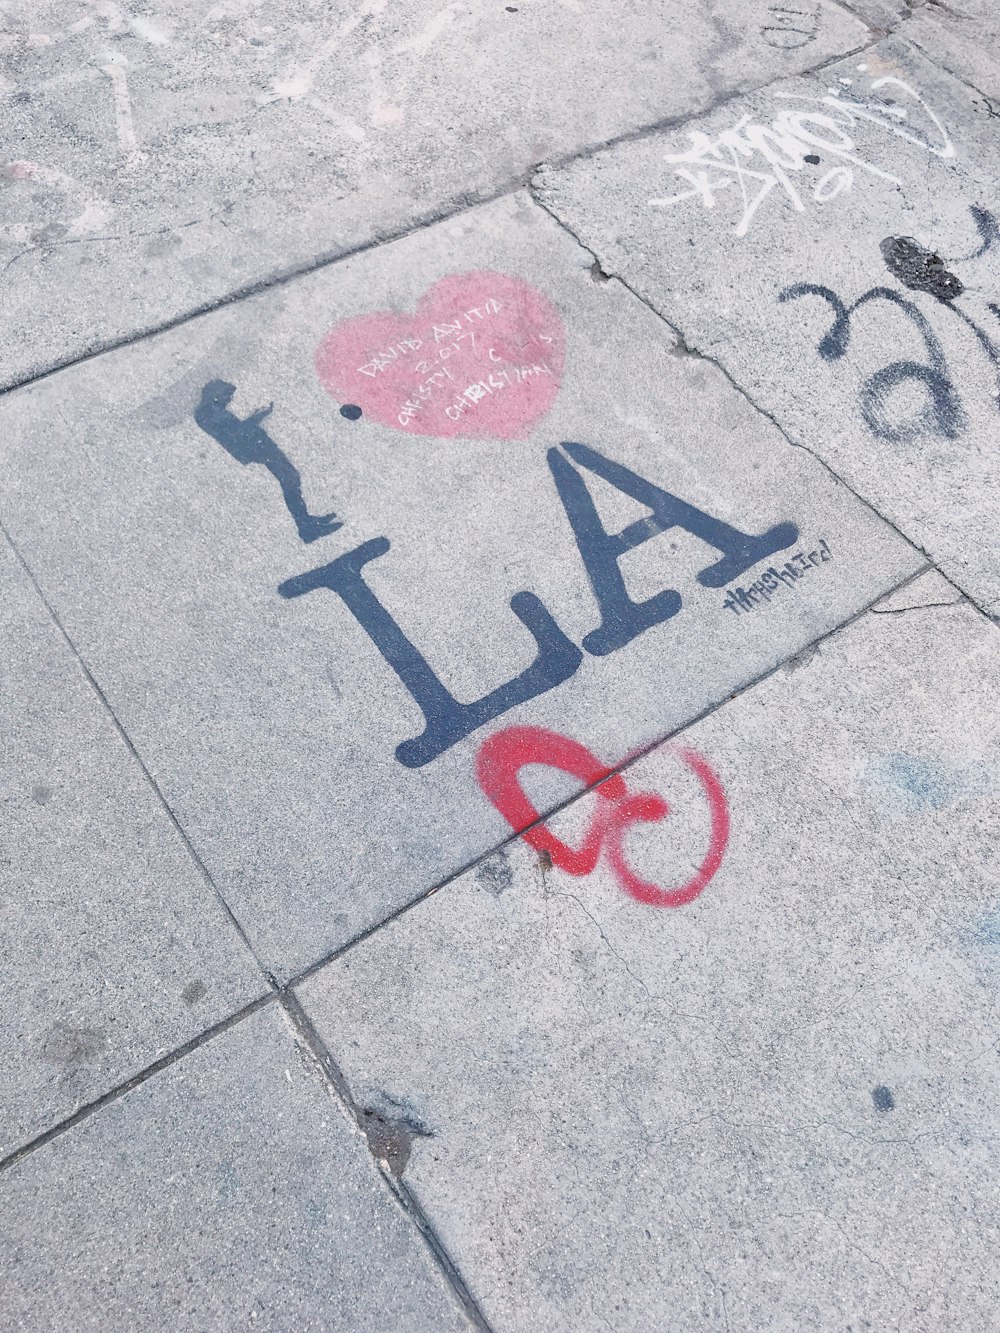 I heart LA graffiti en el pavimento